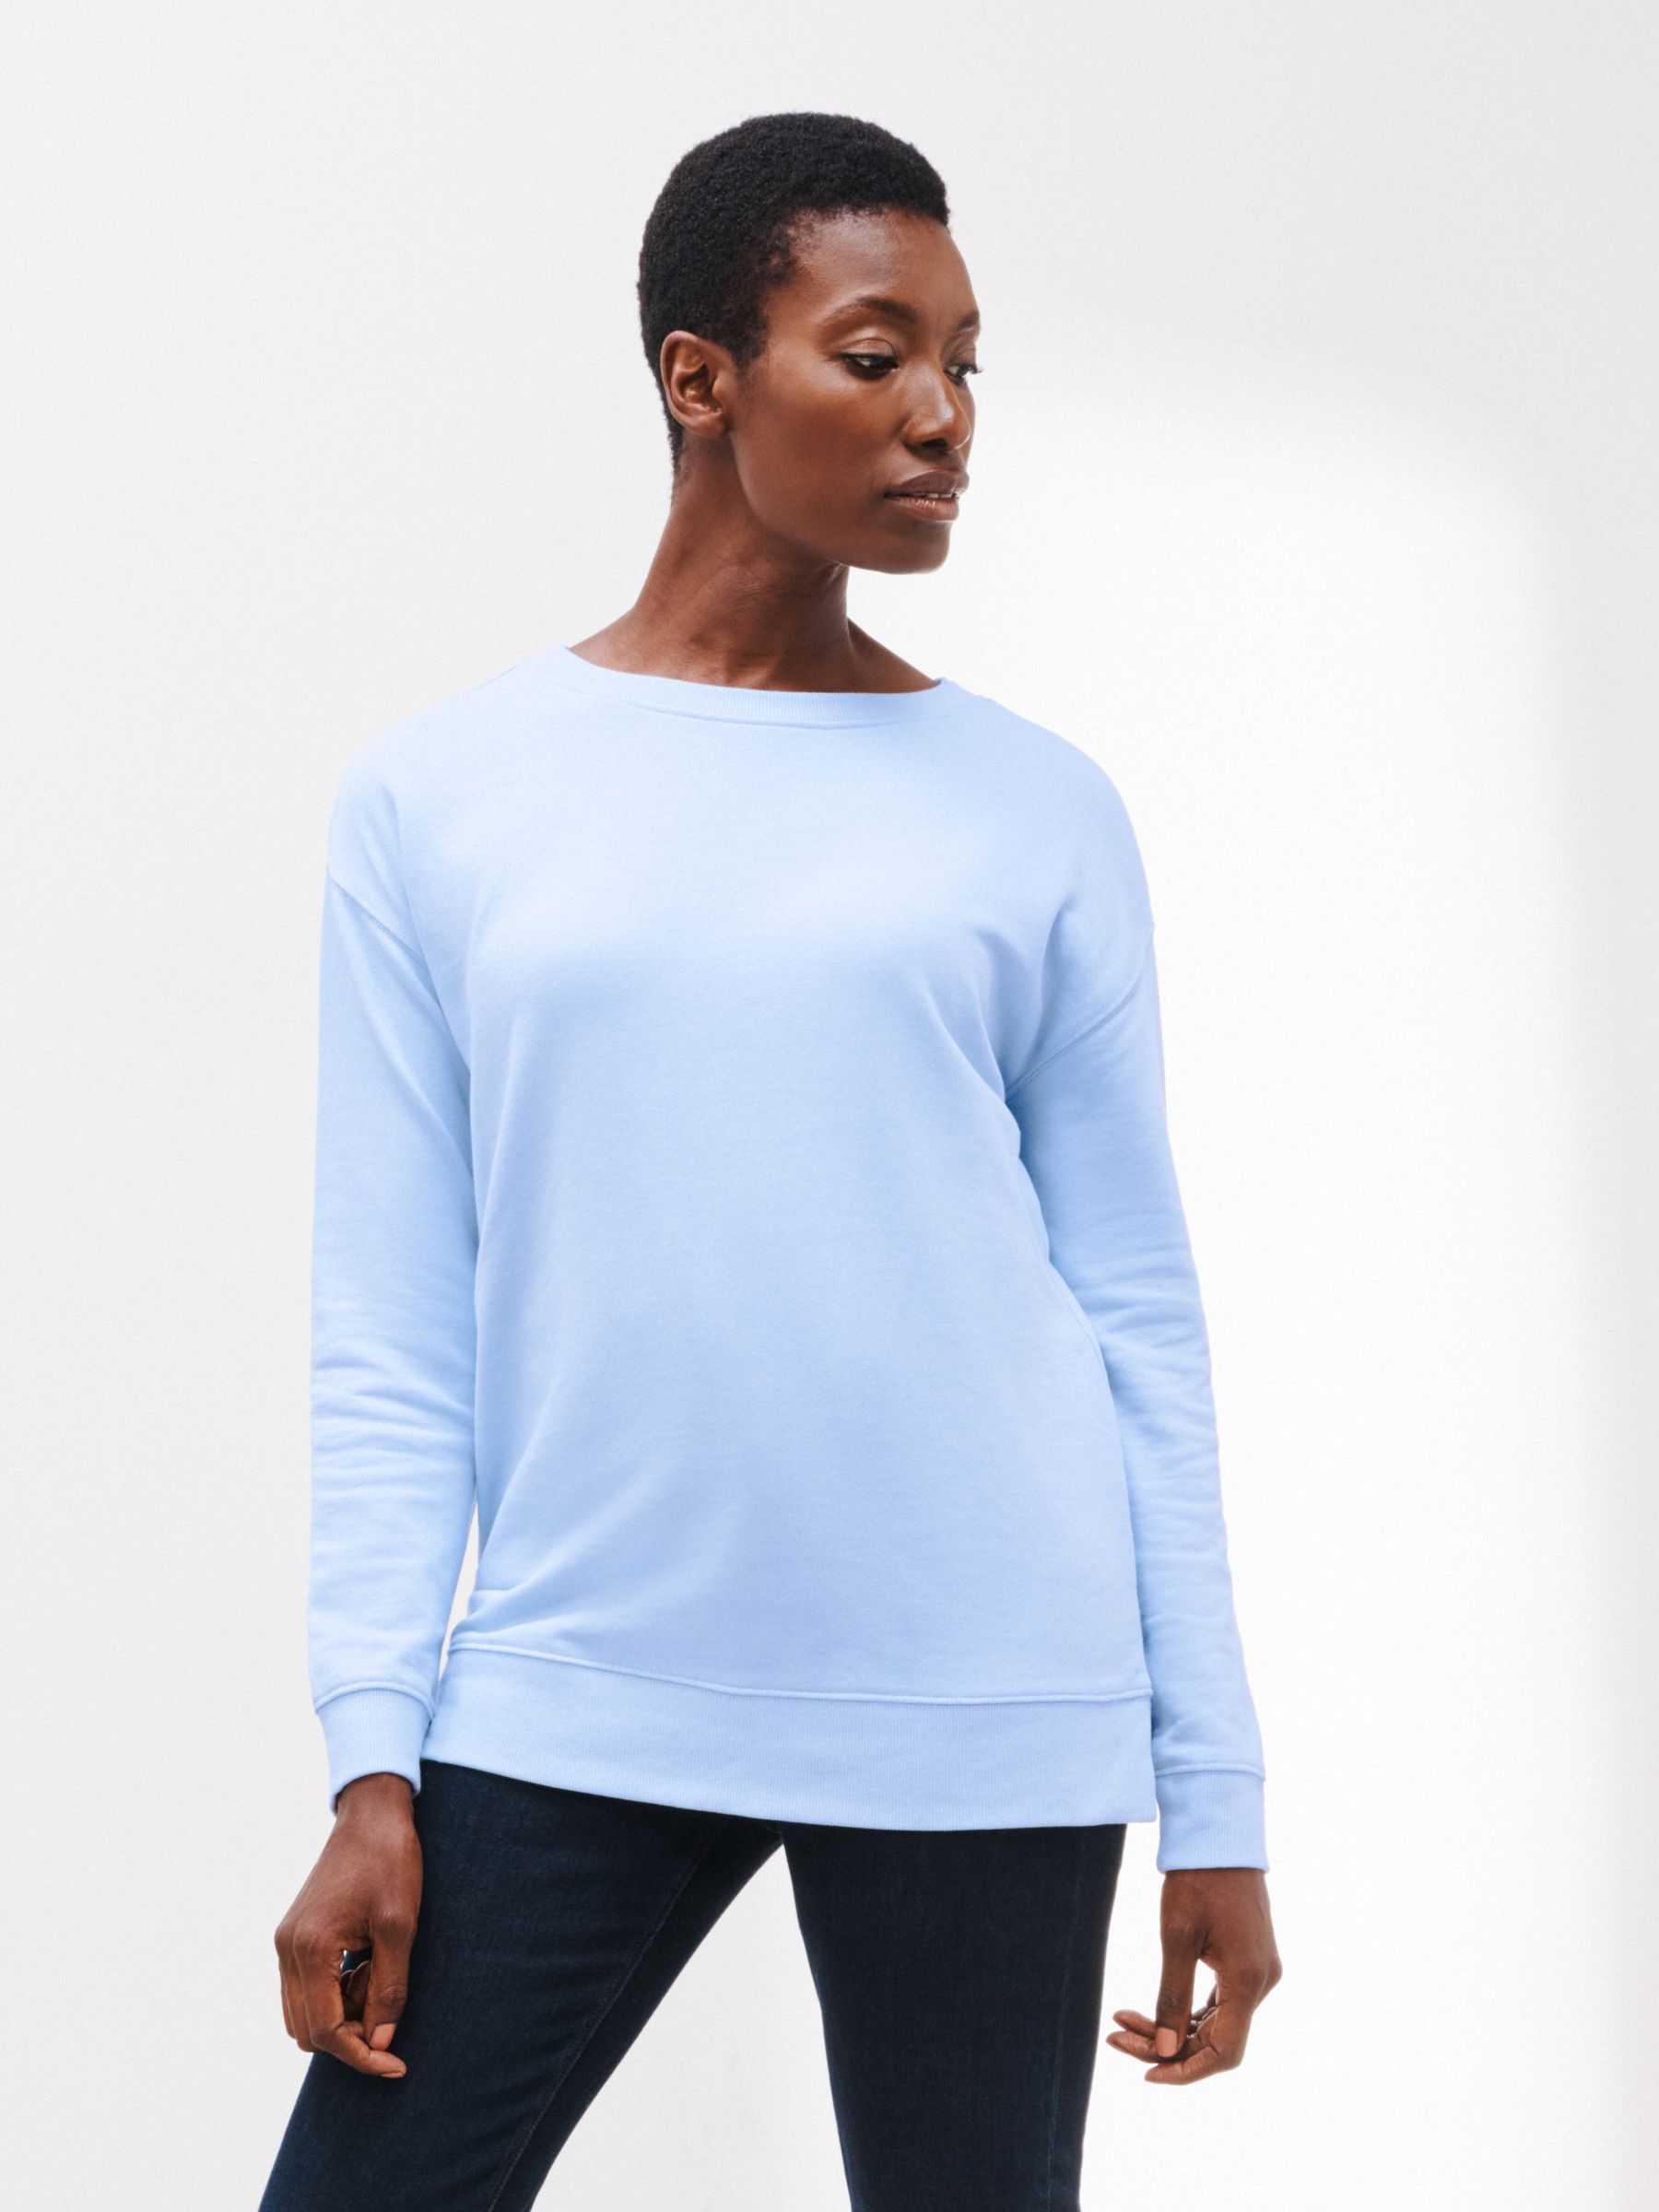 Women's Shirts & Tops - Boat Neck, Sweatshirt | John Lewis & Partners